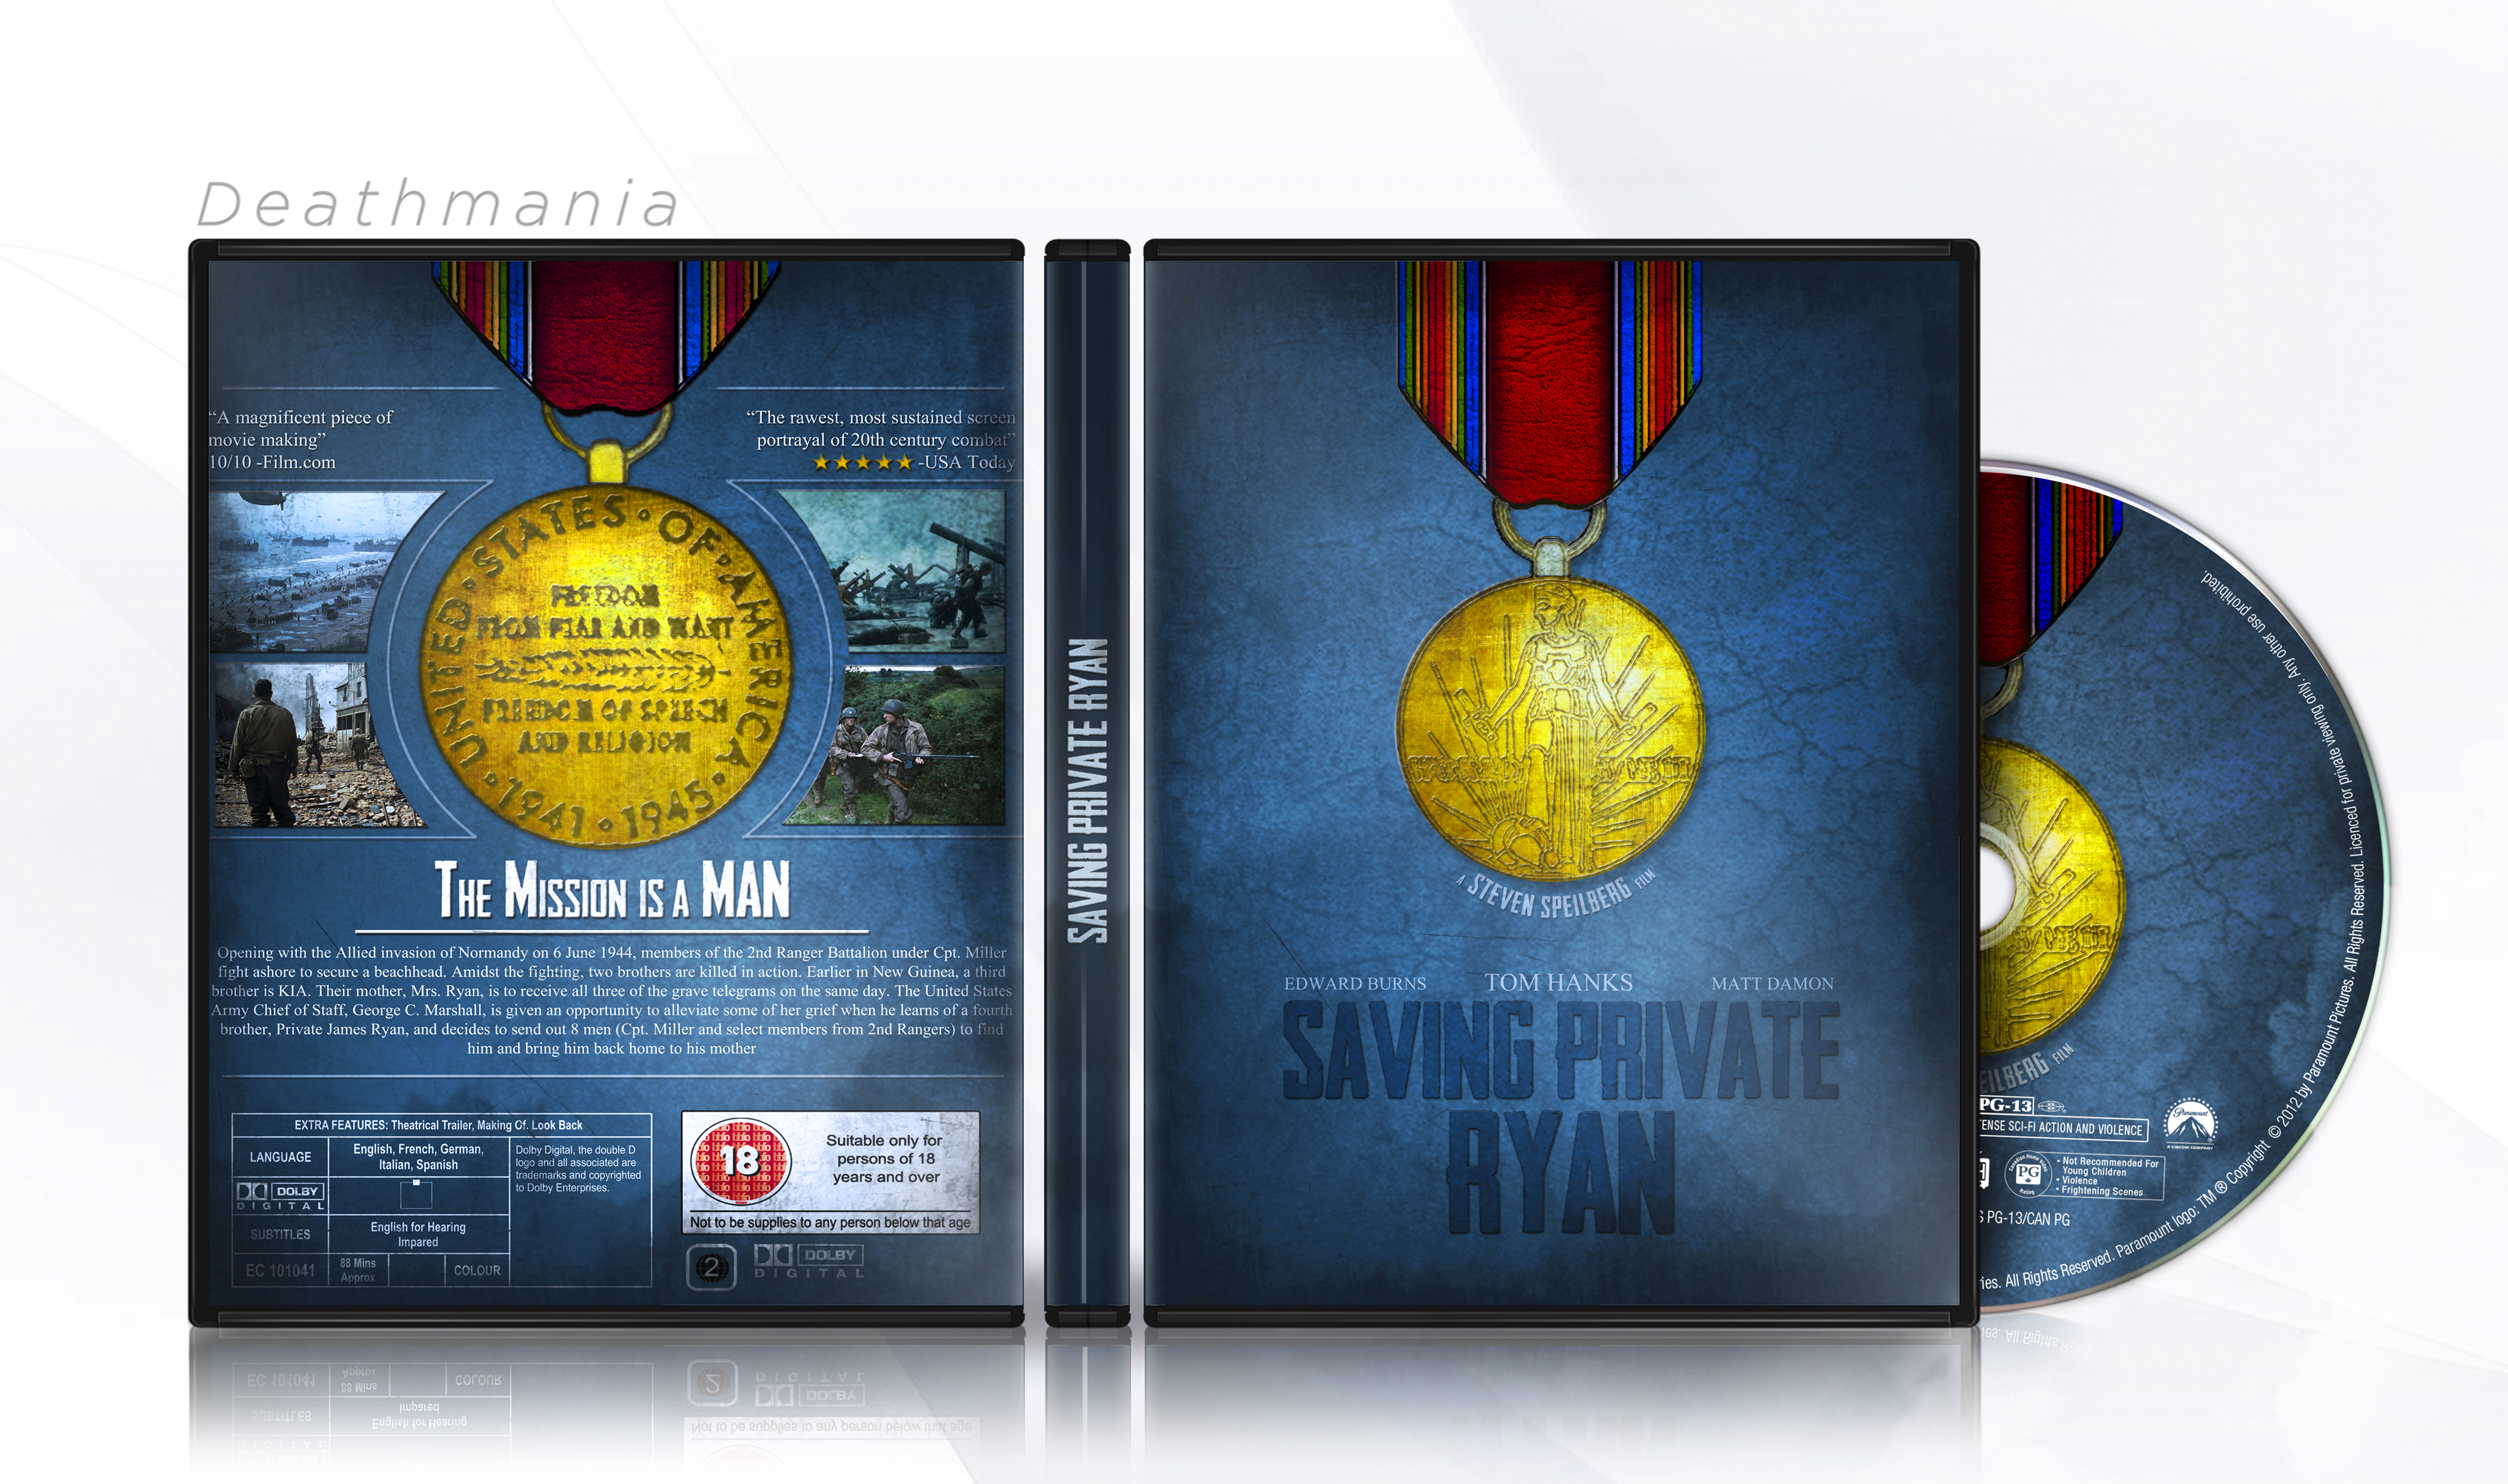 Saving Private Ryan box cover